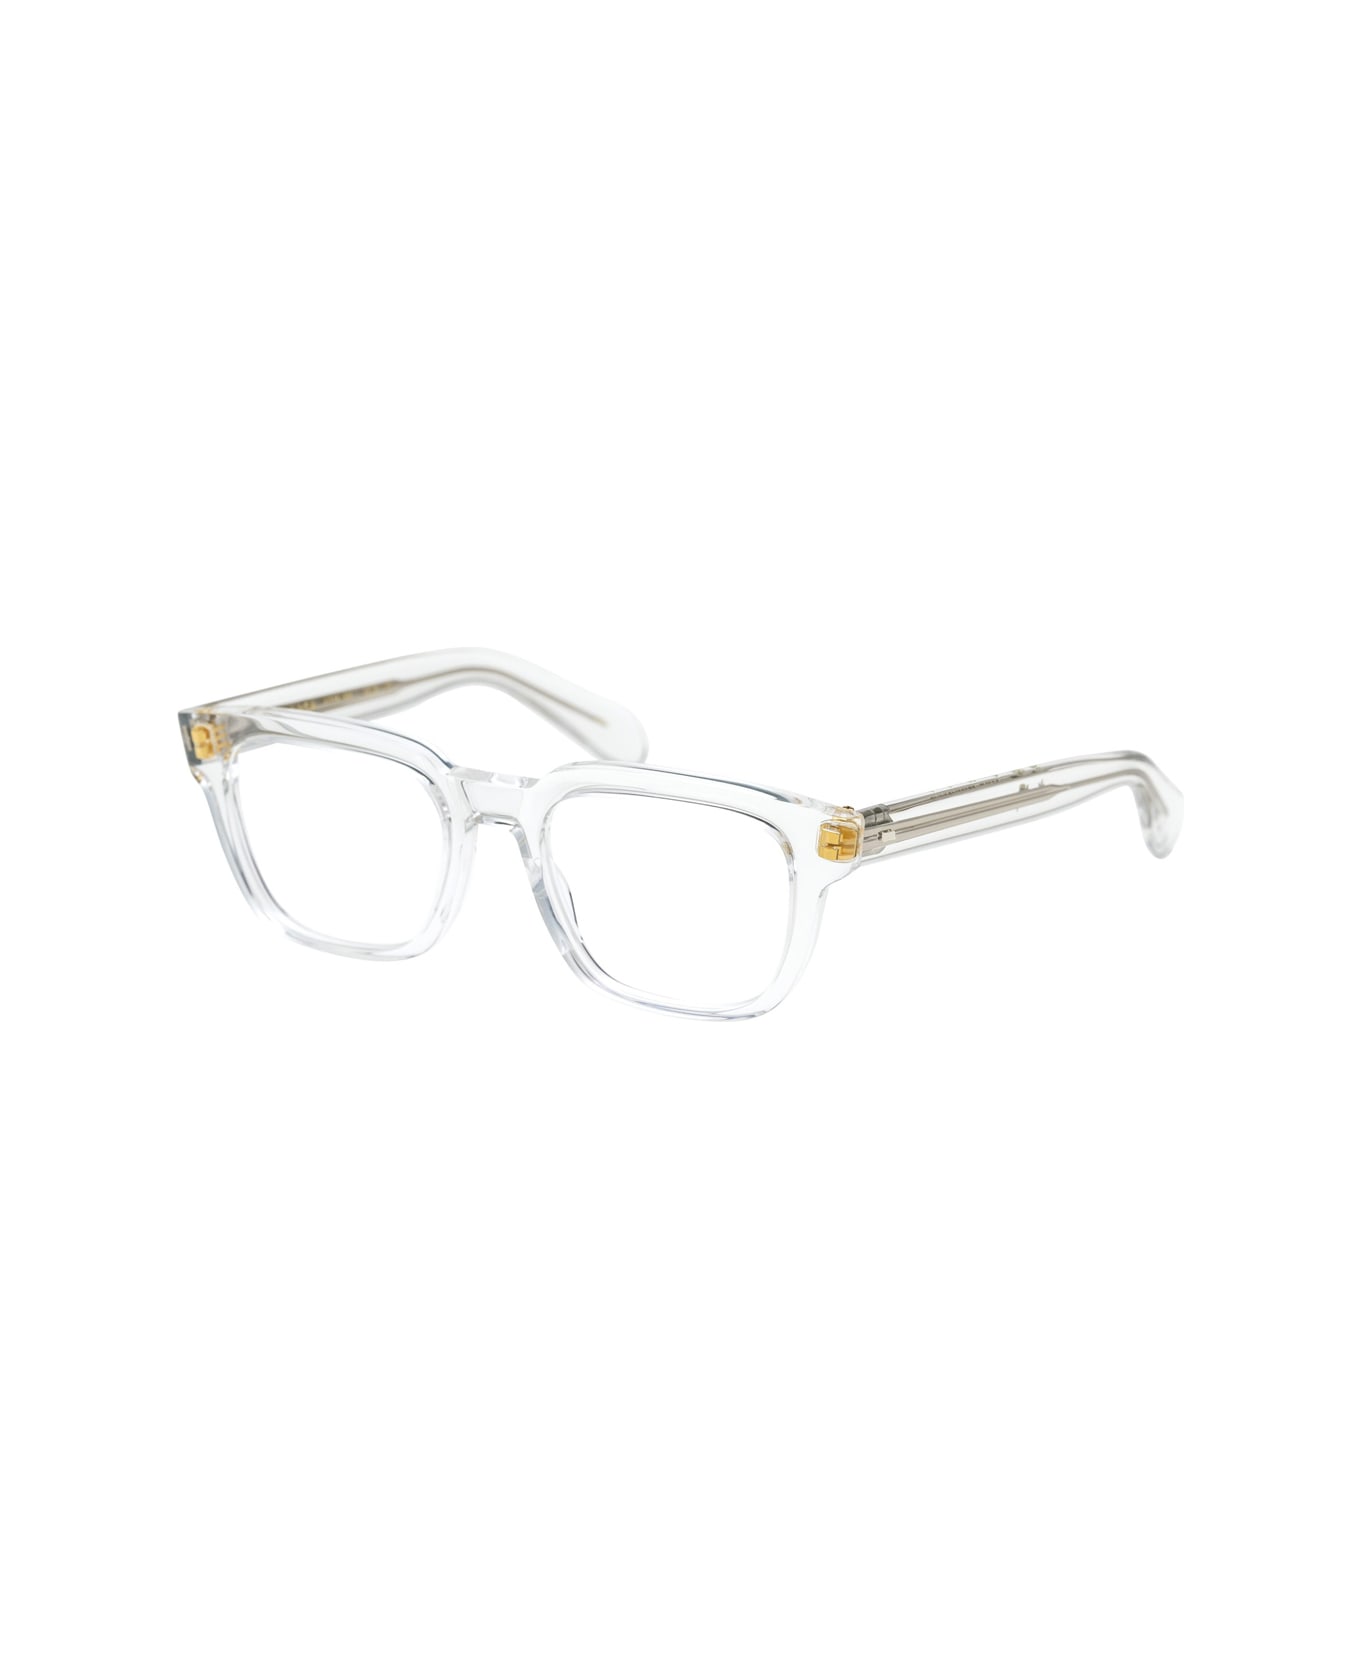 Masunaga Kk 100 40 Glasses - Trasparente